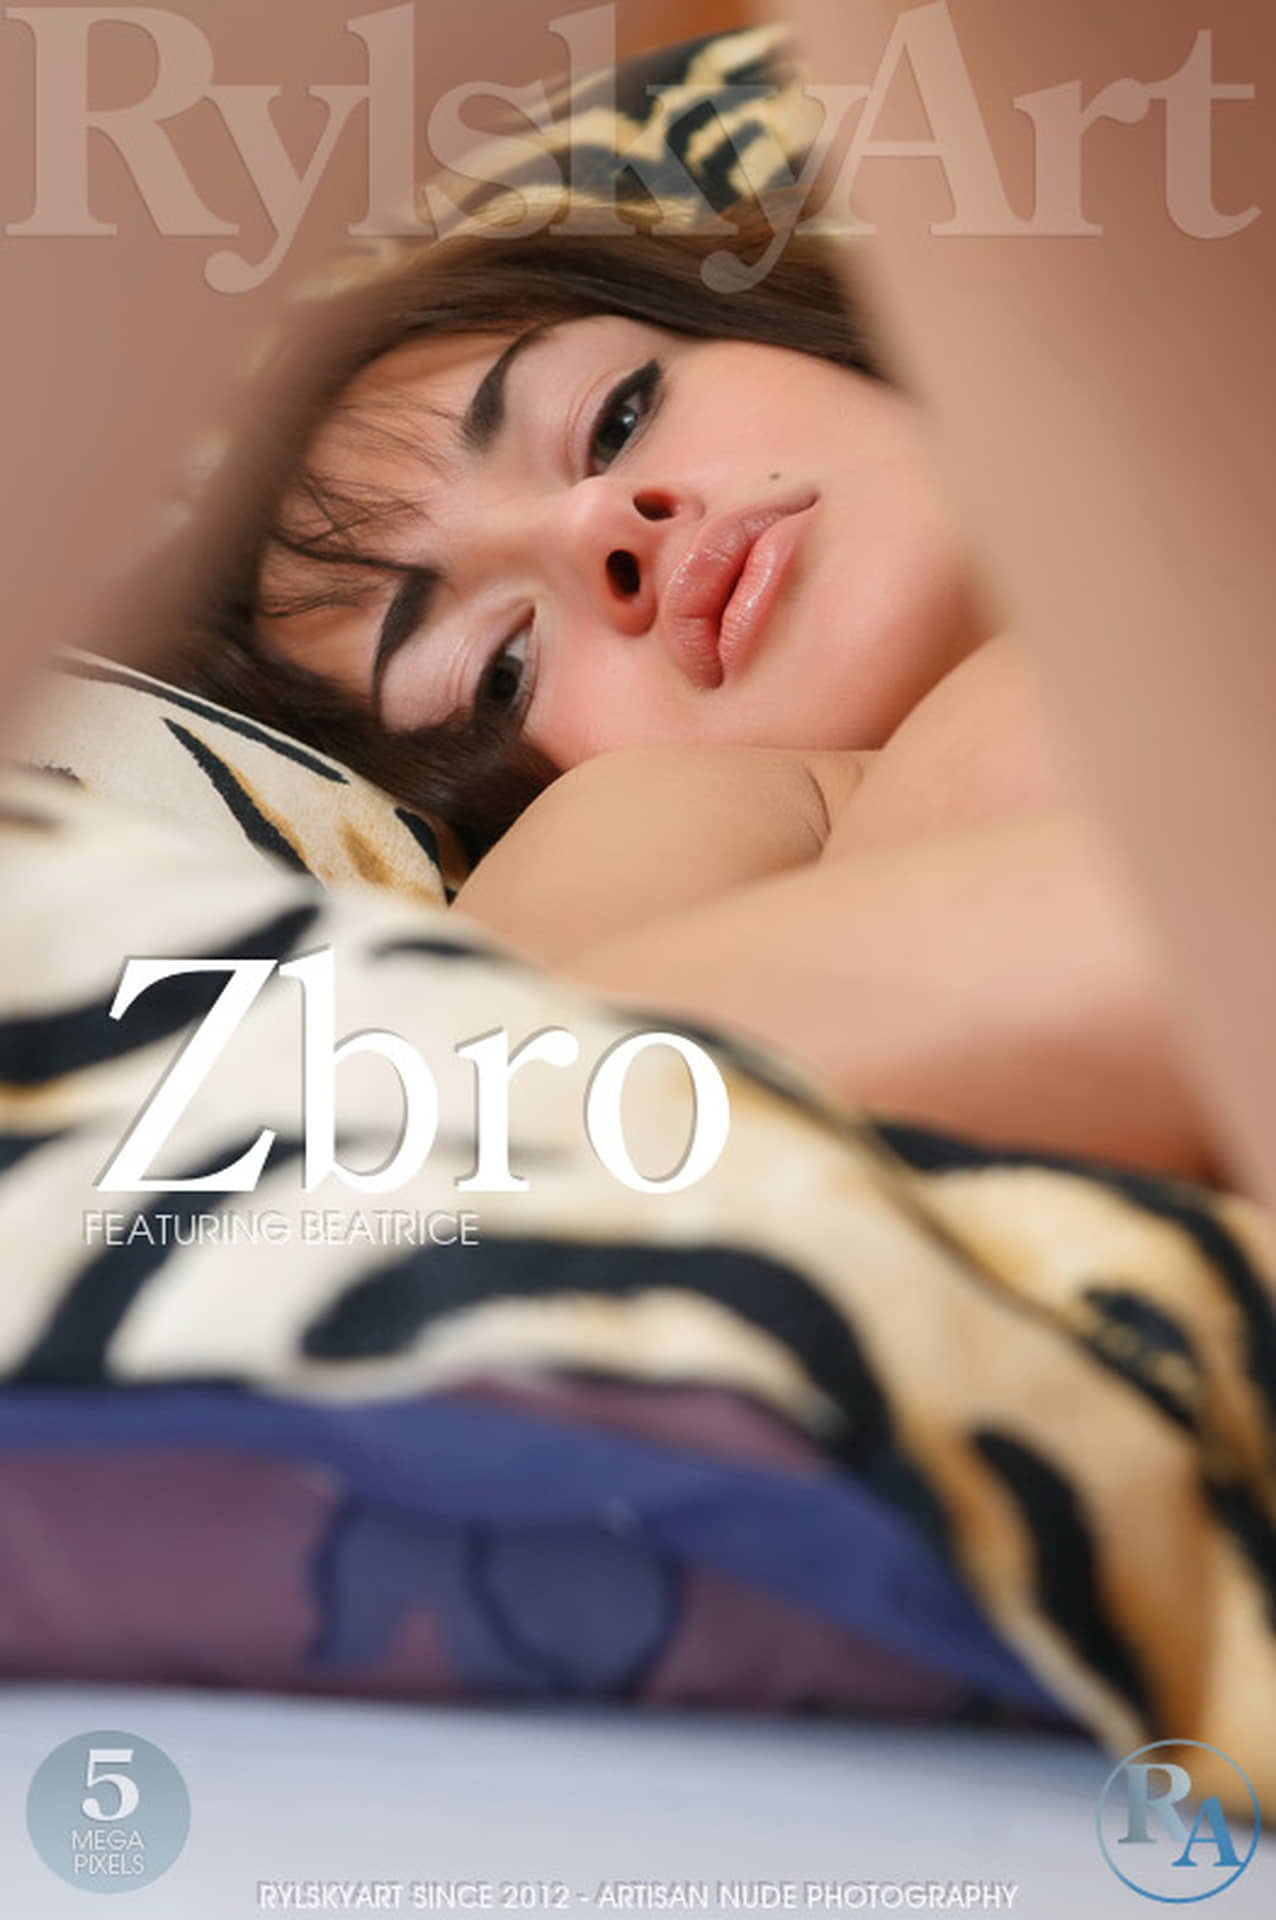 The crush on the zebra stripes——ZBRO-BEATRICE